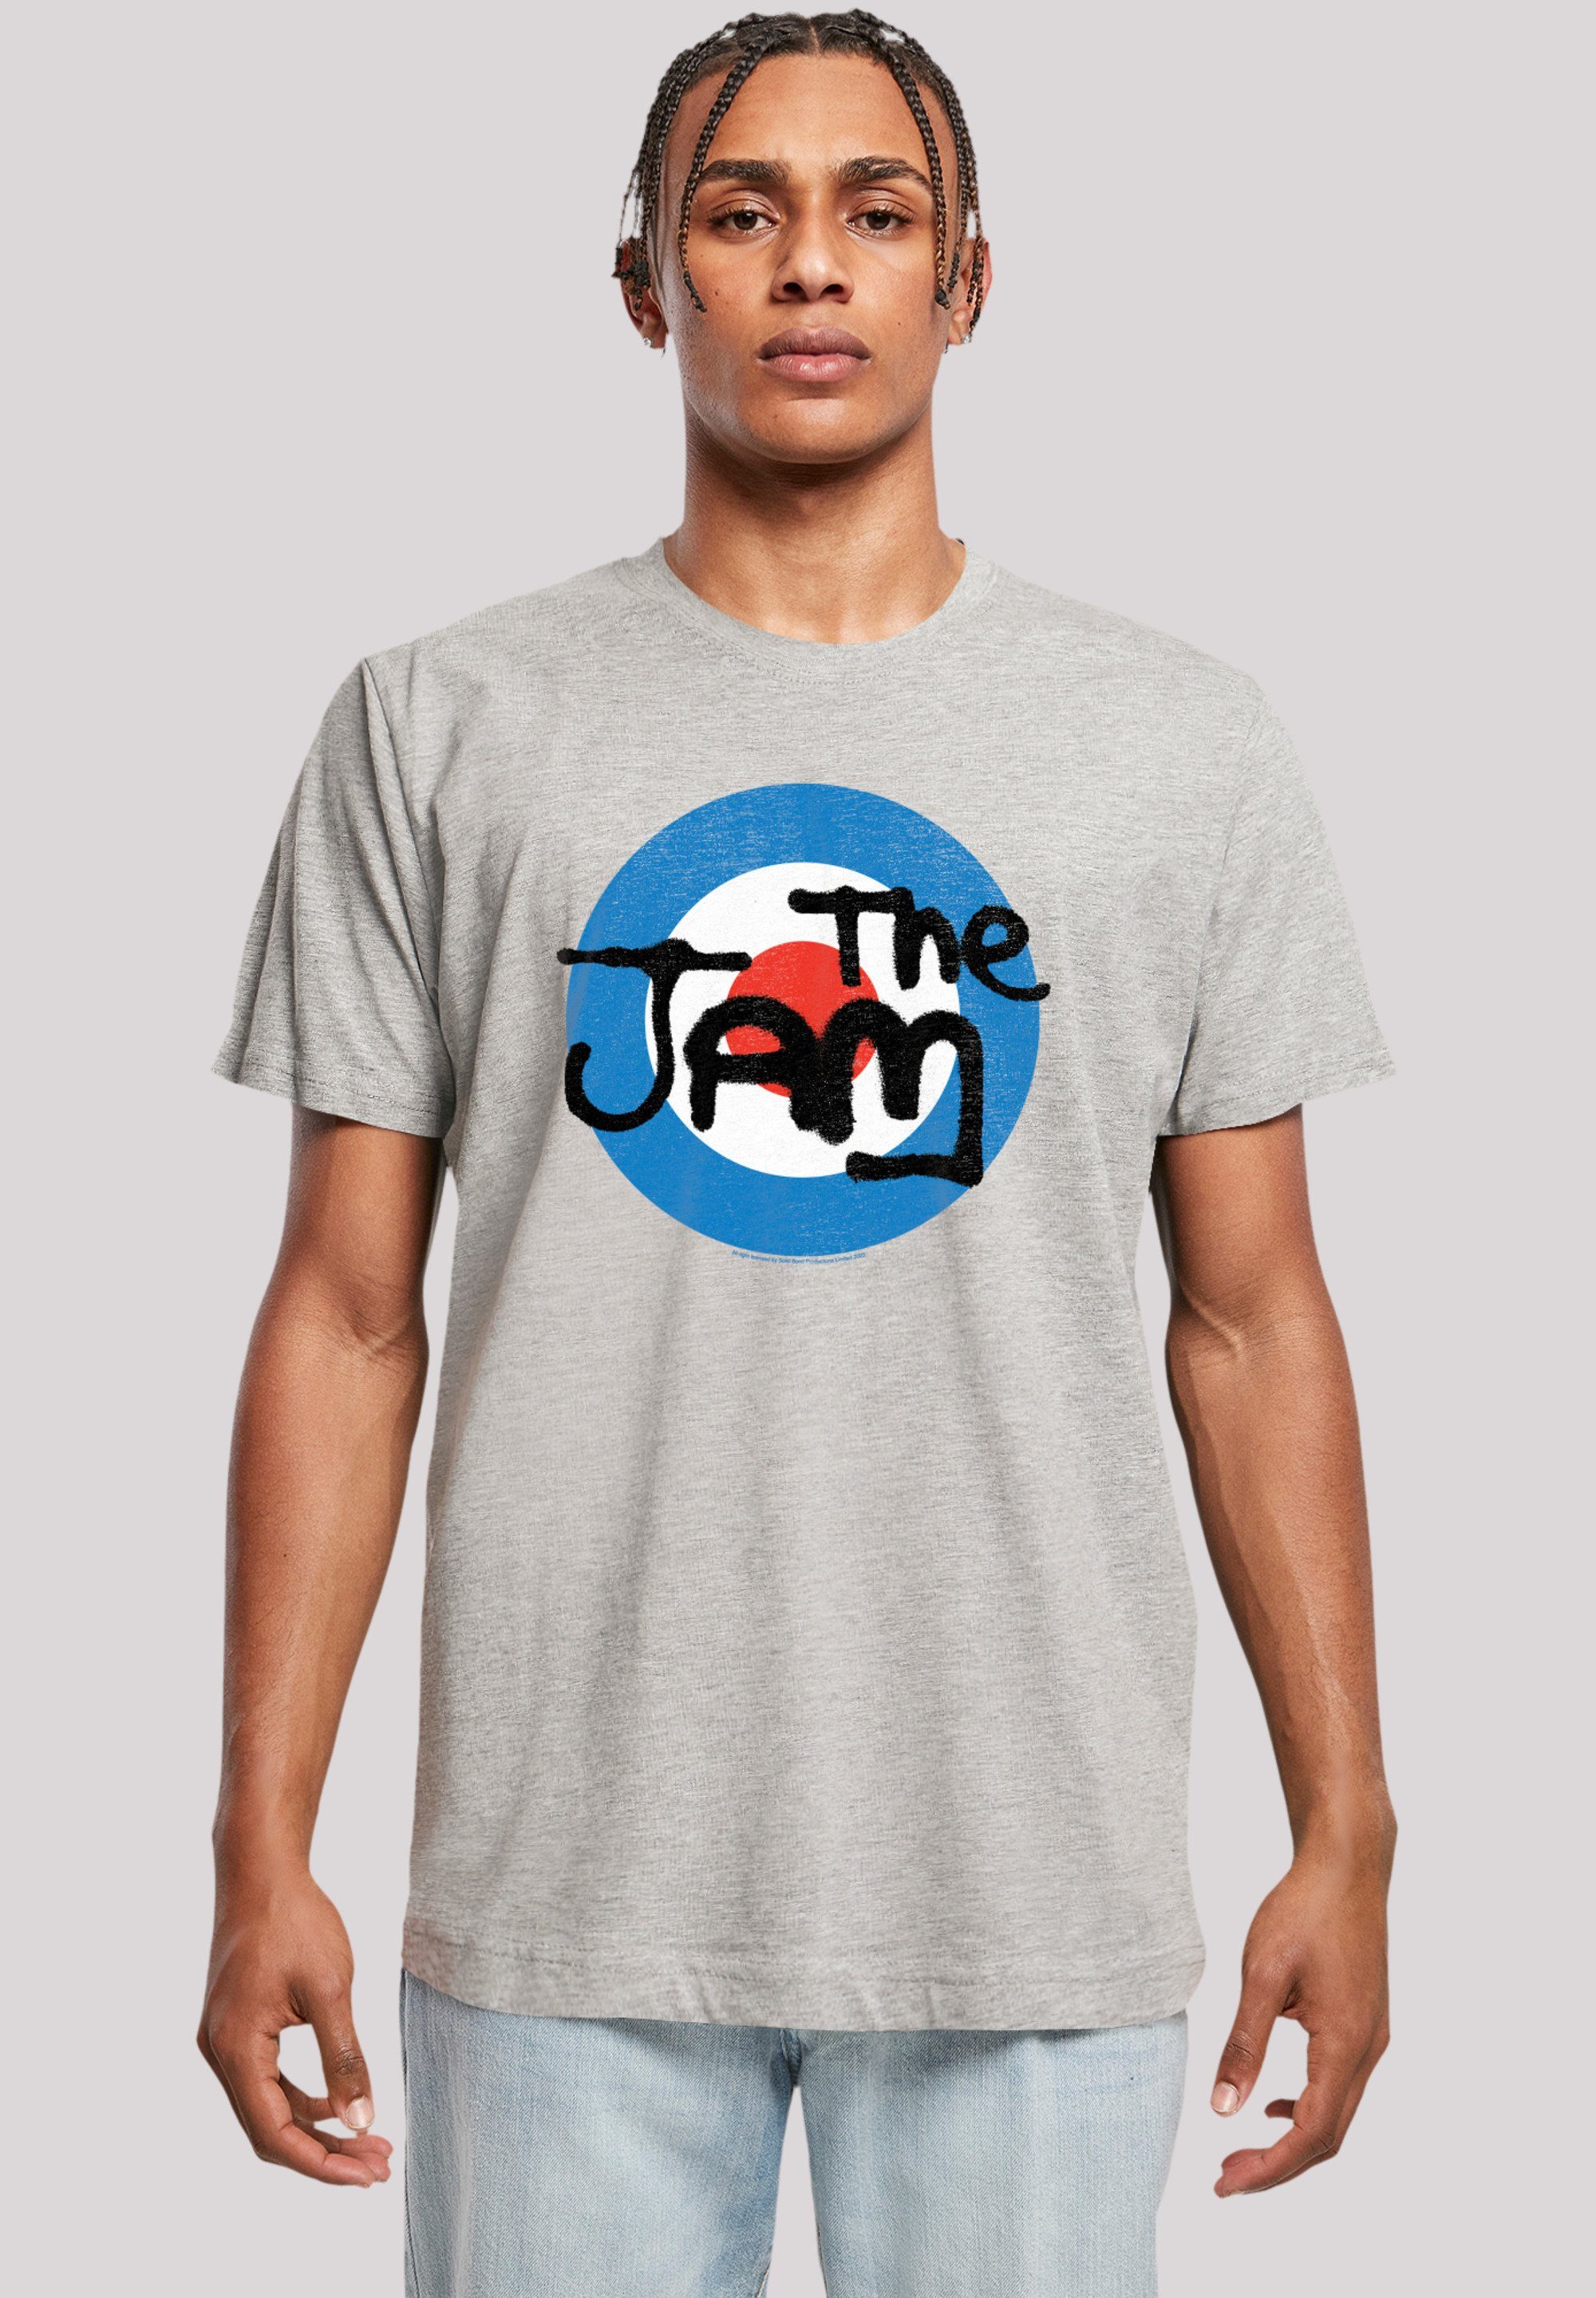 F4NT4STIC T-Shirt The Jam Band Qualität, Rippbündchen am Saum am Hals Doppelnähte Classic Logo Premium und